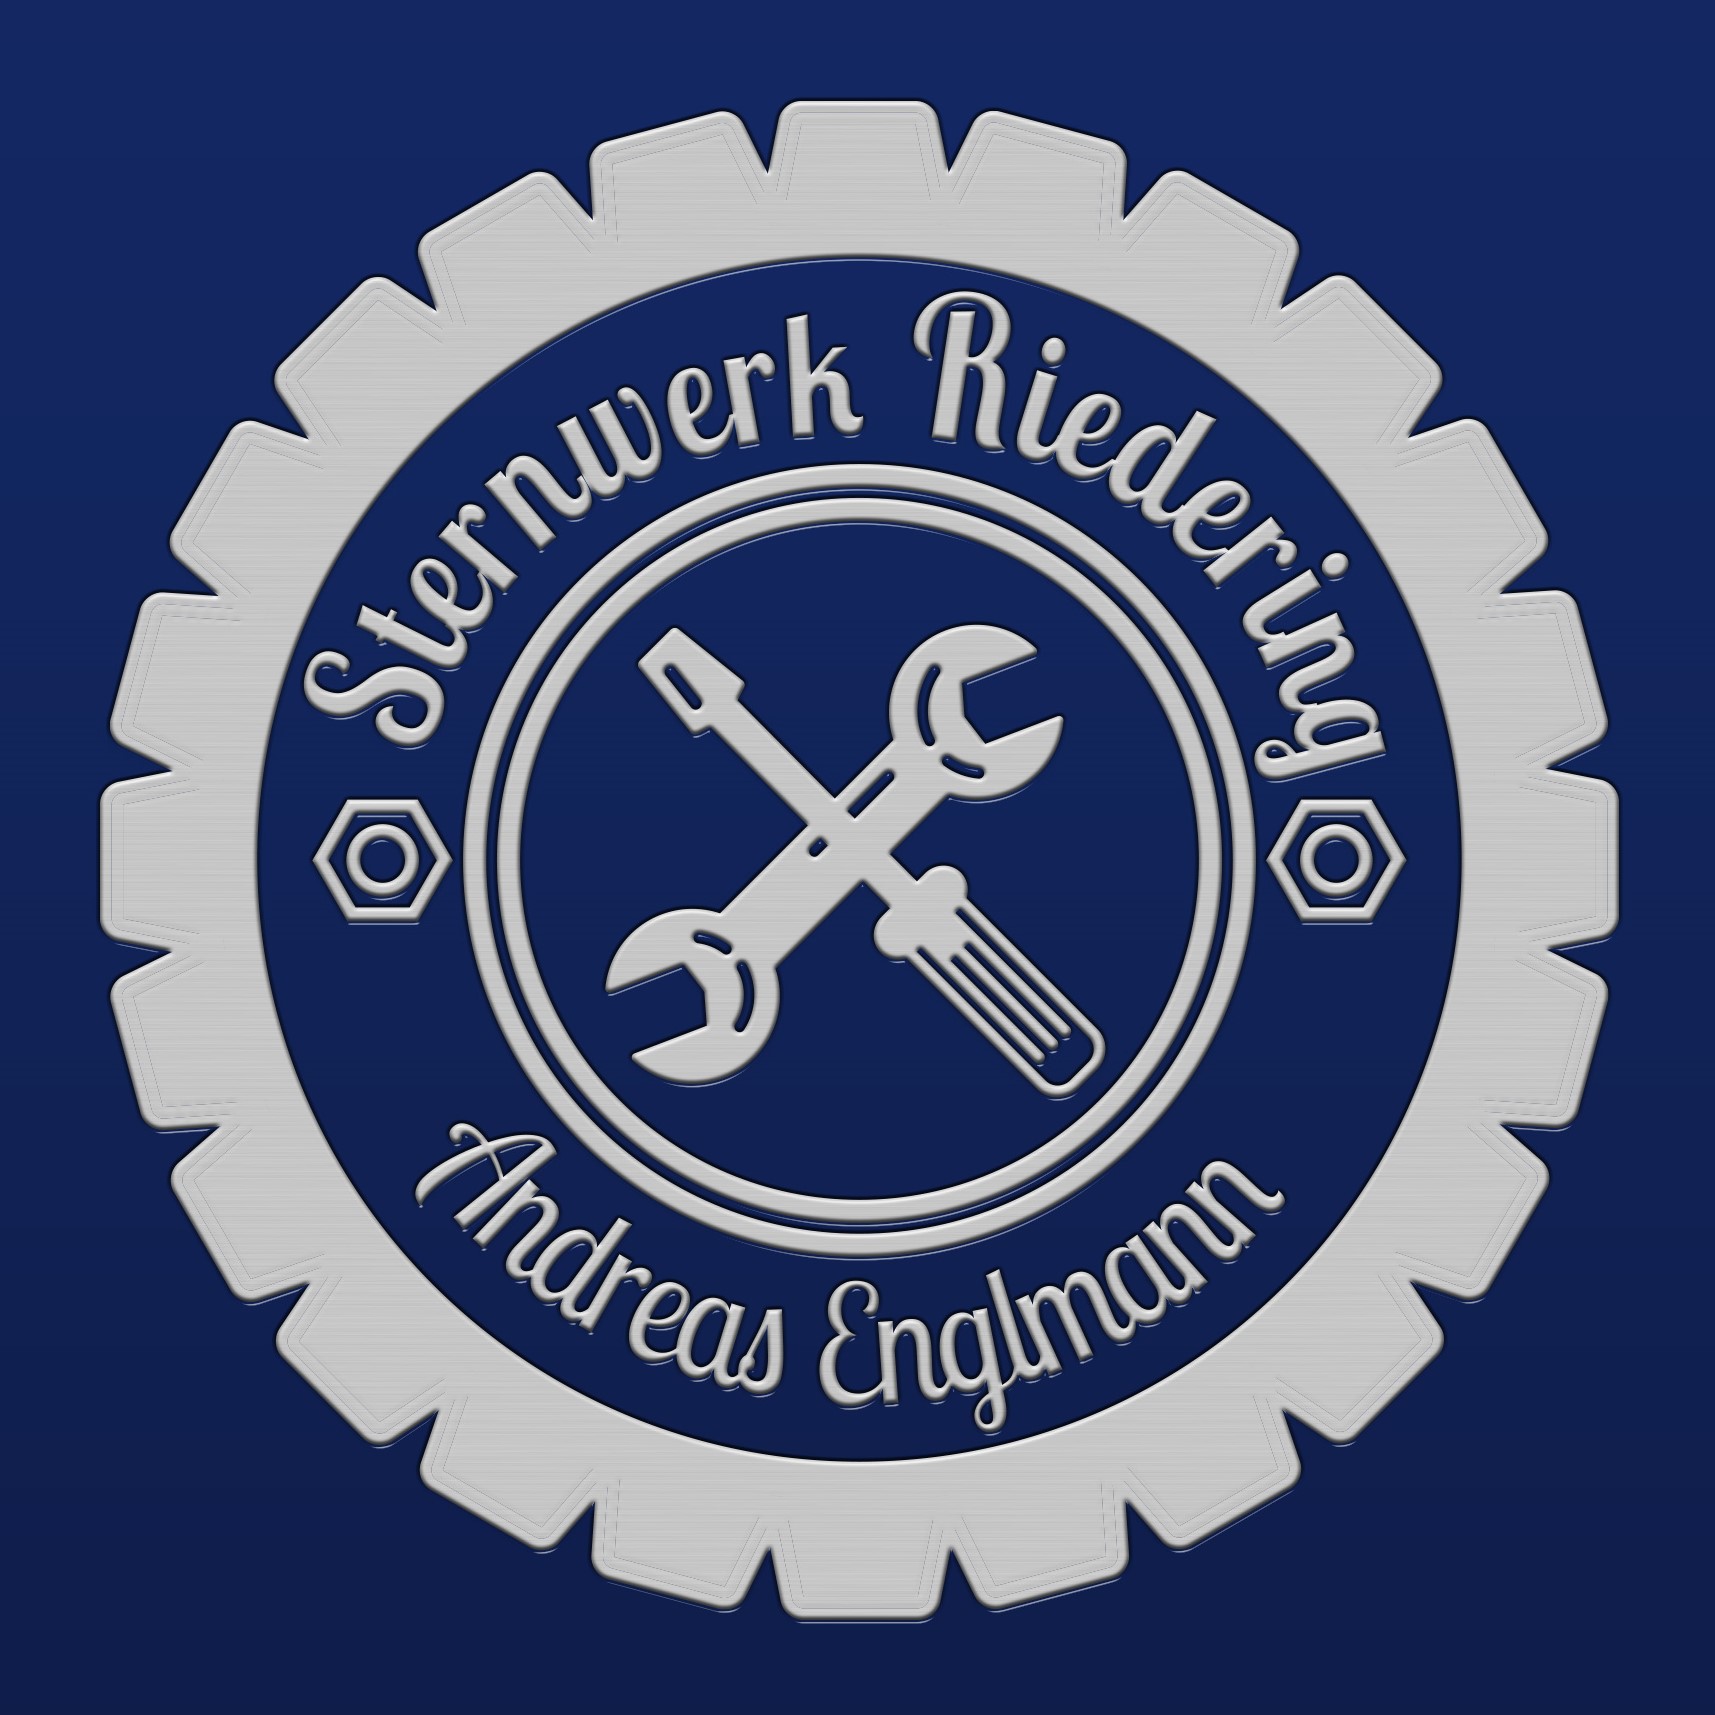 Sternwerk Riedering logo